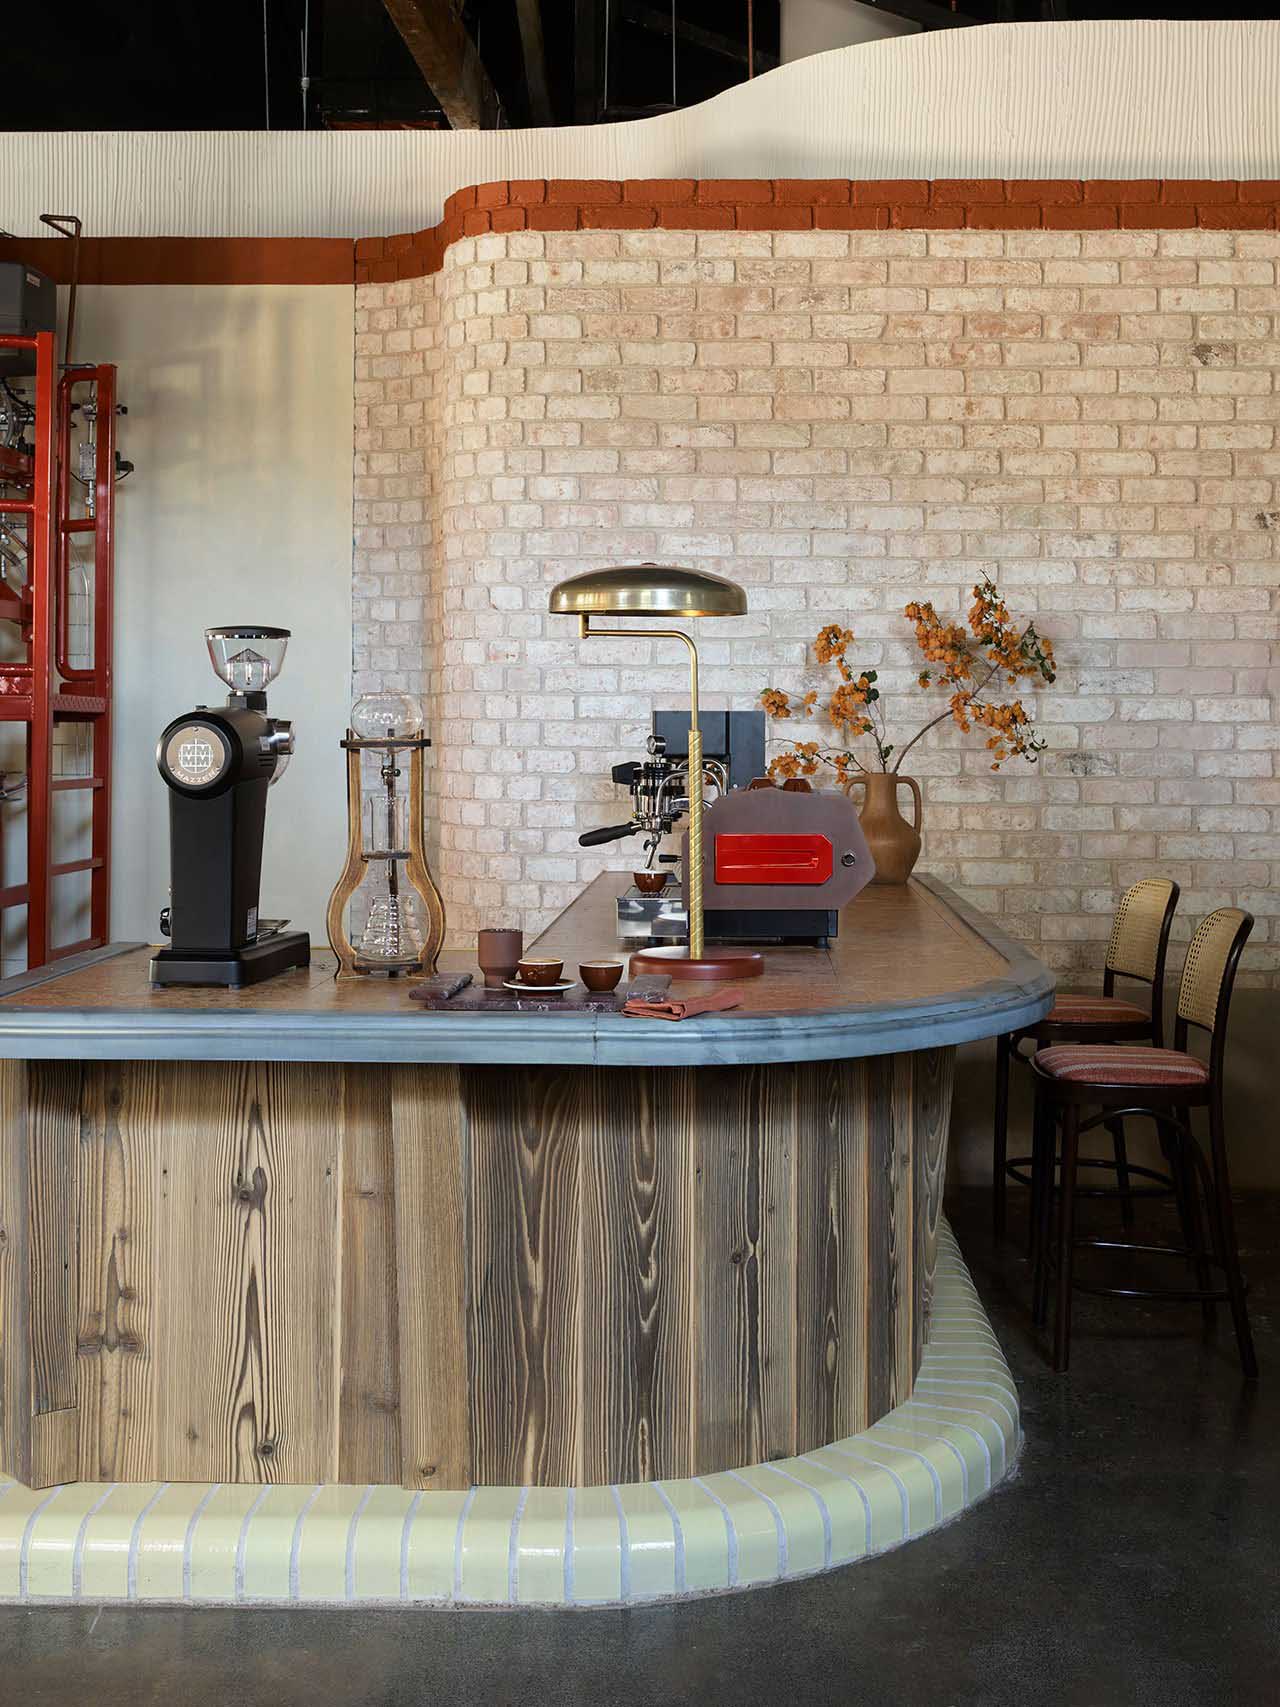 ALEXANDER & CO.,咖啡廳設計案例,GENOVESE COFFEE HOUSE,國外咖啡廳設計,300㎡,咖啡廳設計,GENOVESE COFFEE,意式咖啡,悉尼,倉庫改造